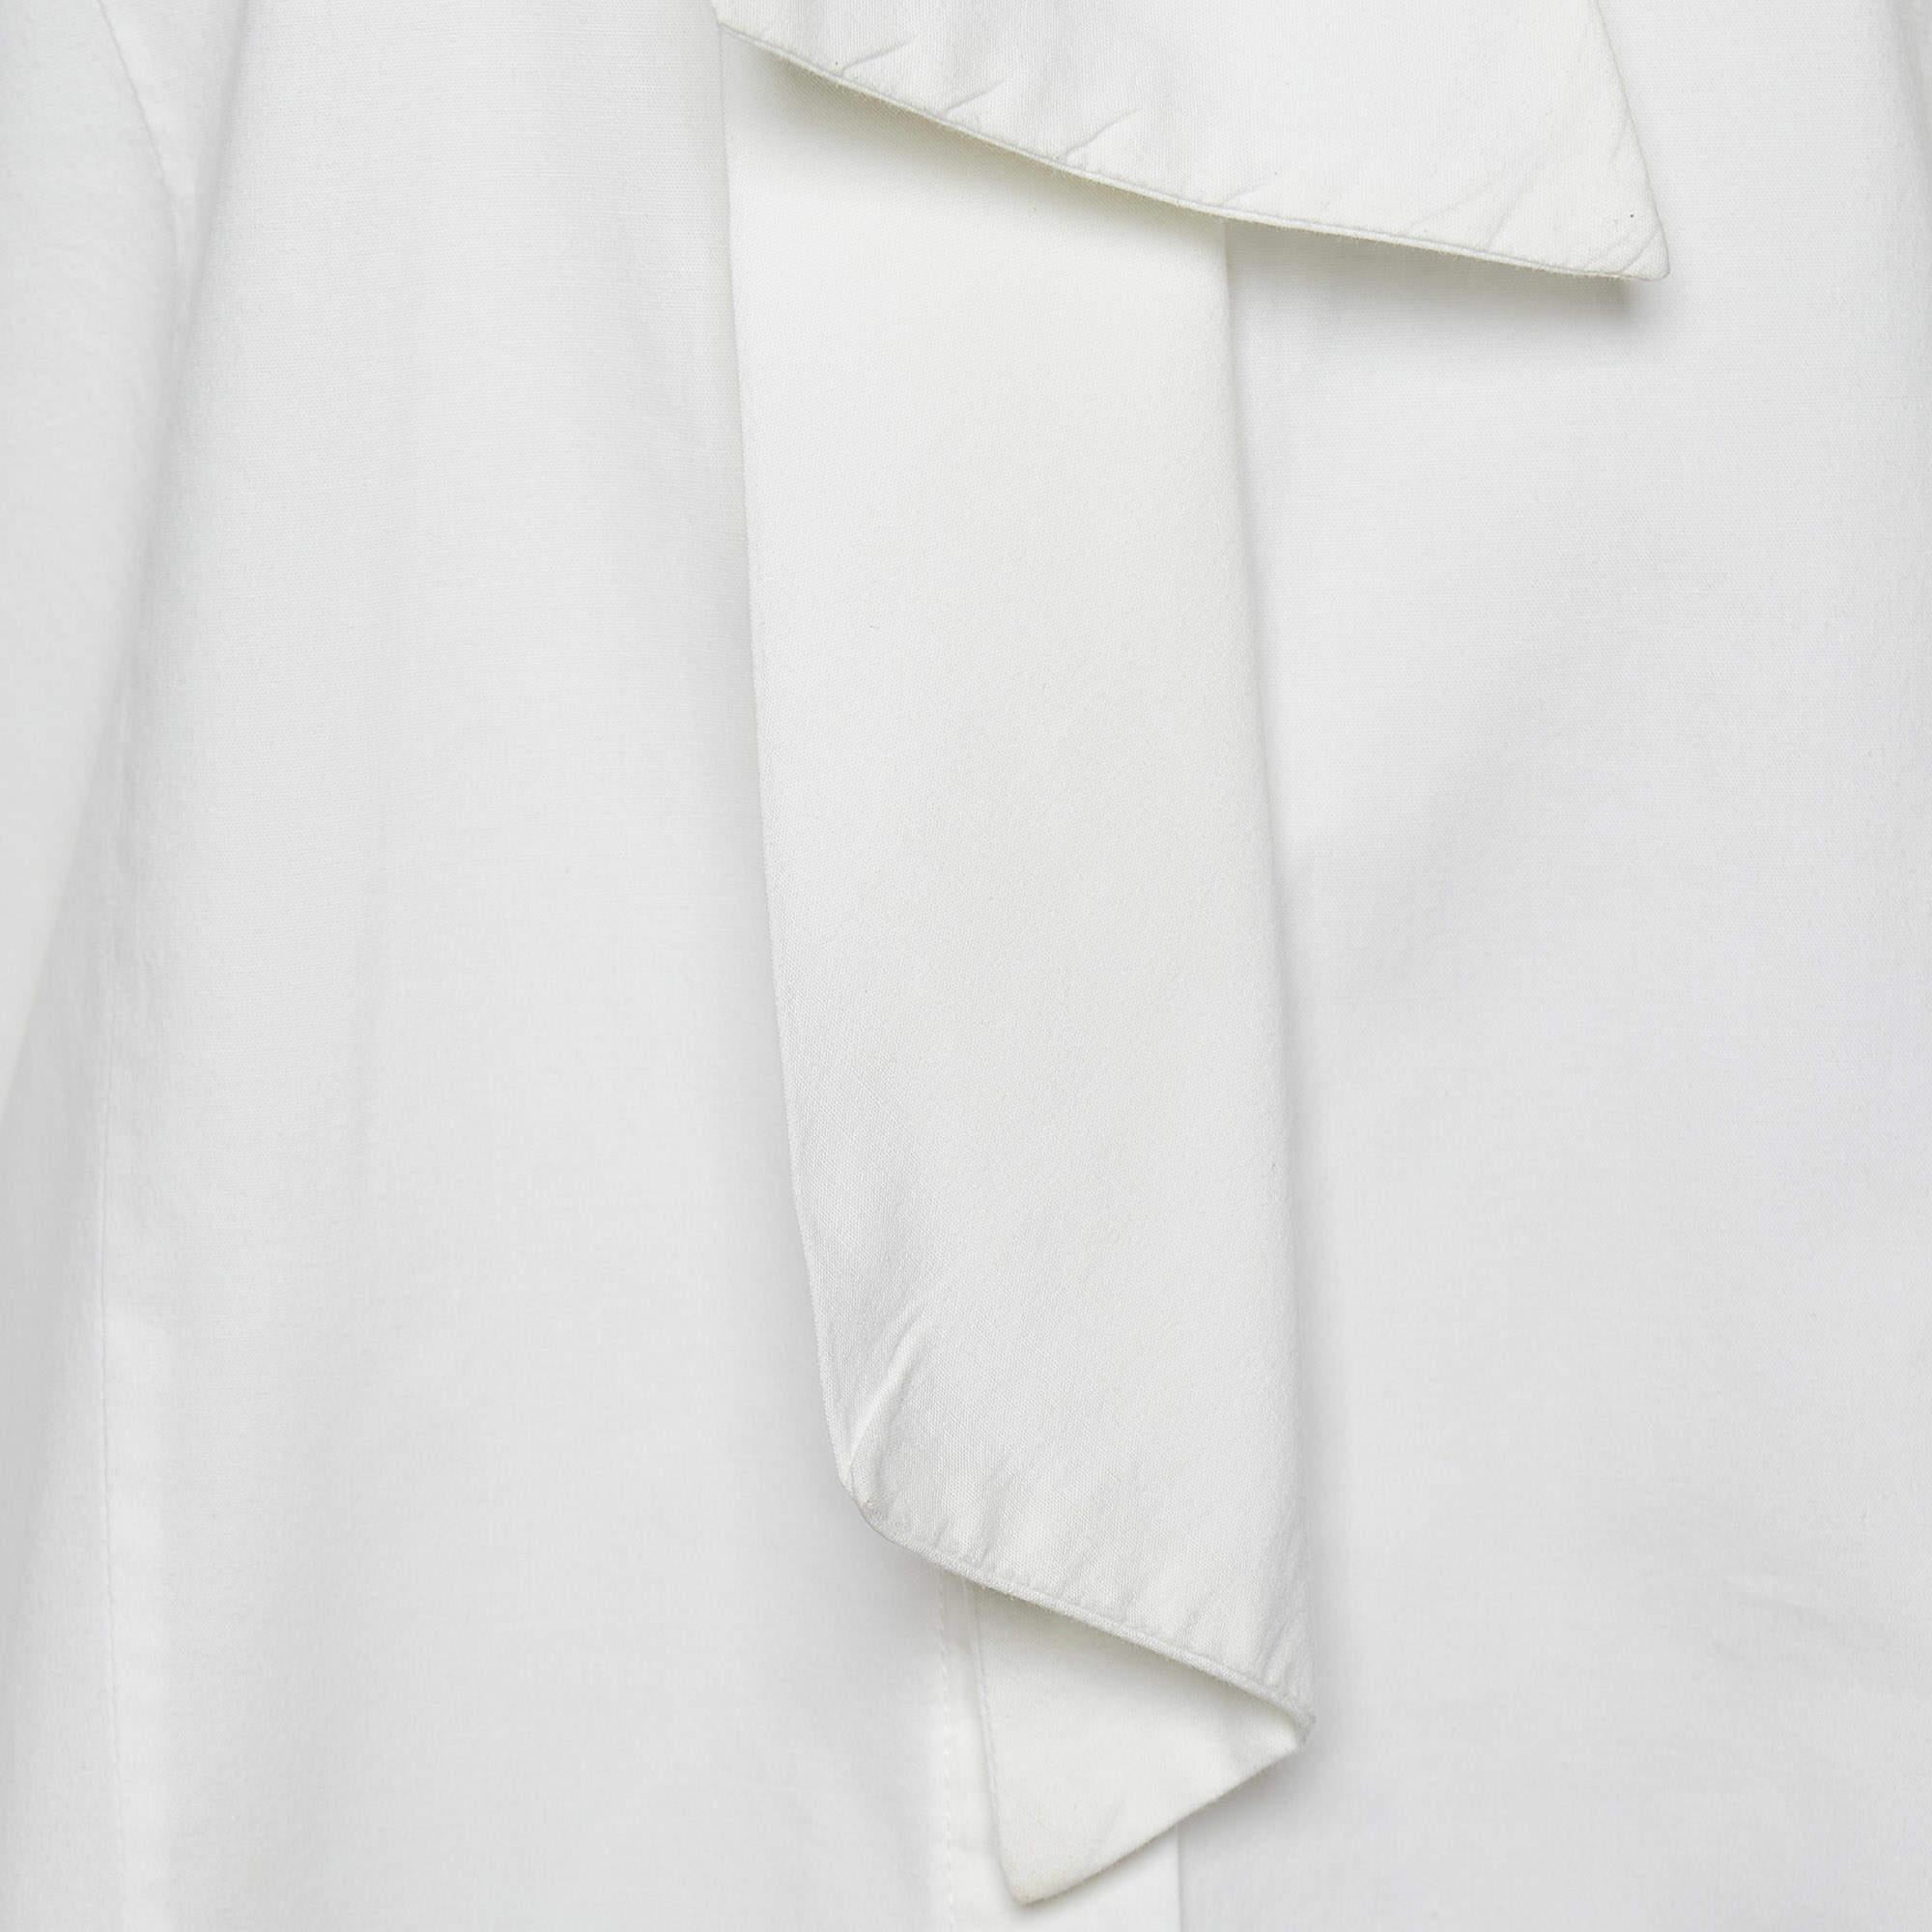 Alexander McQueen White Cotton Tie Detail Shirt S In Good Condition For Sale In Dubai, Al Qouz 2